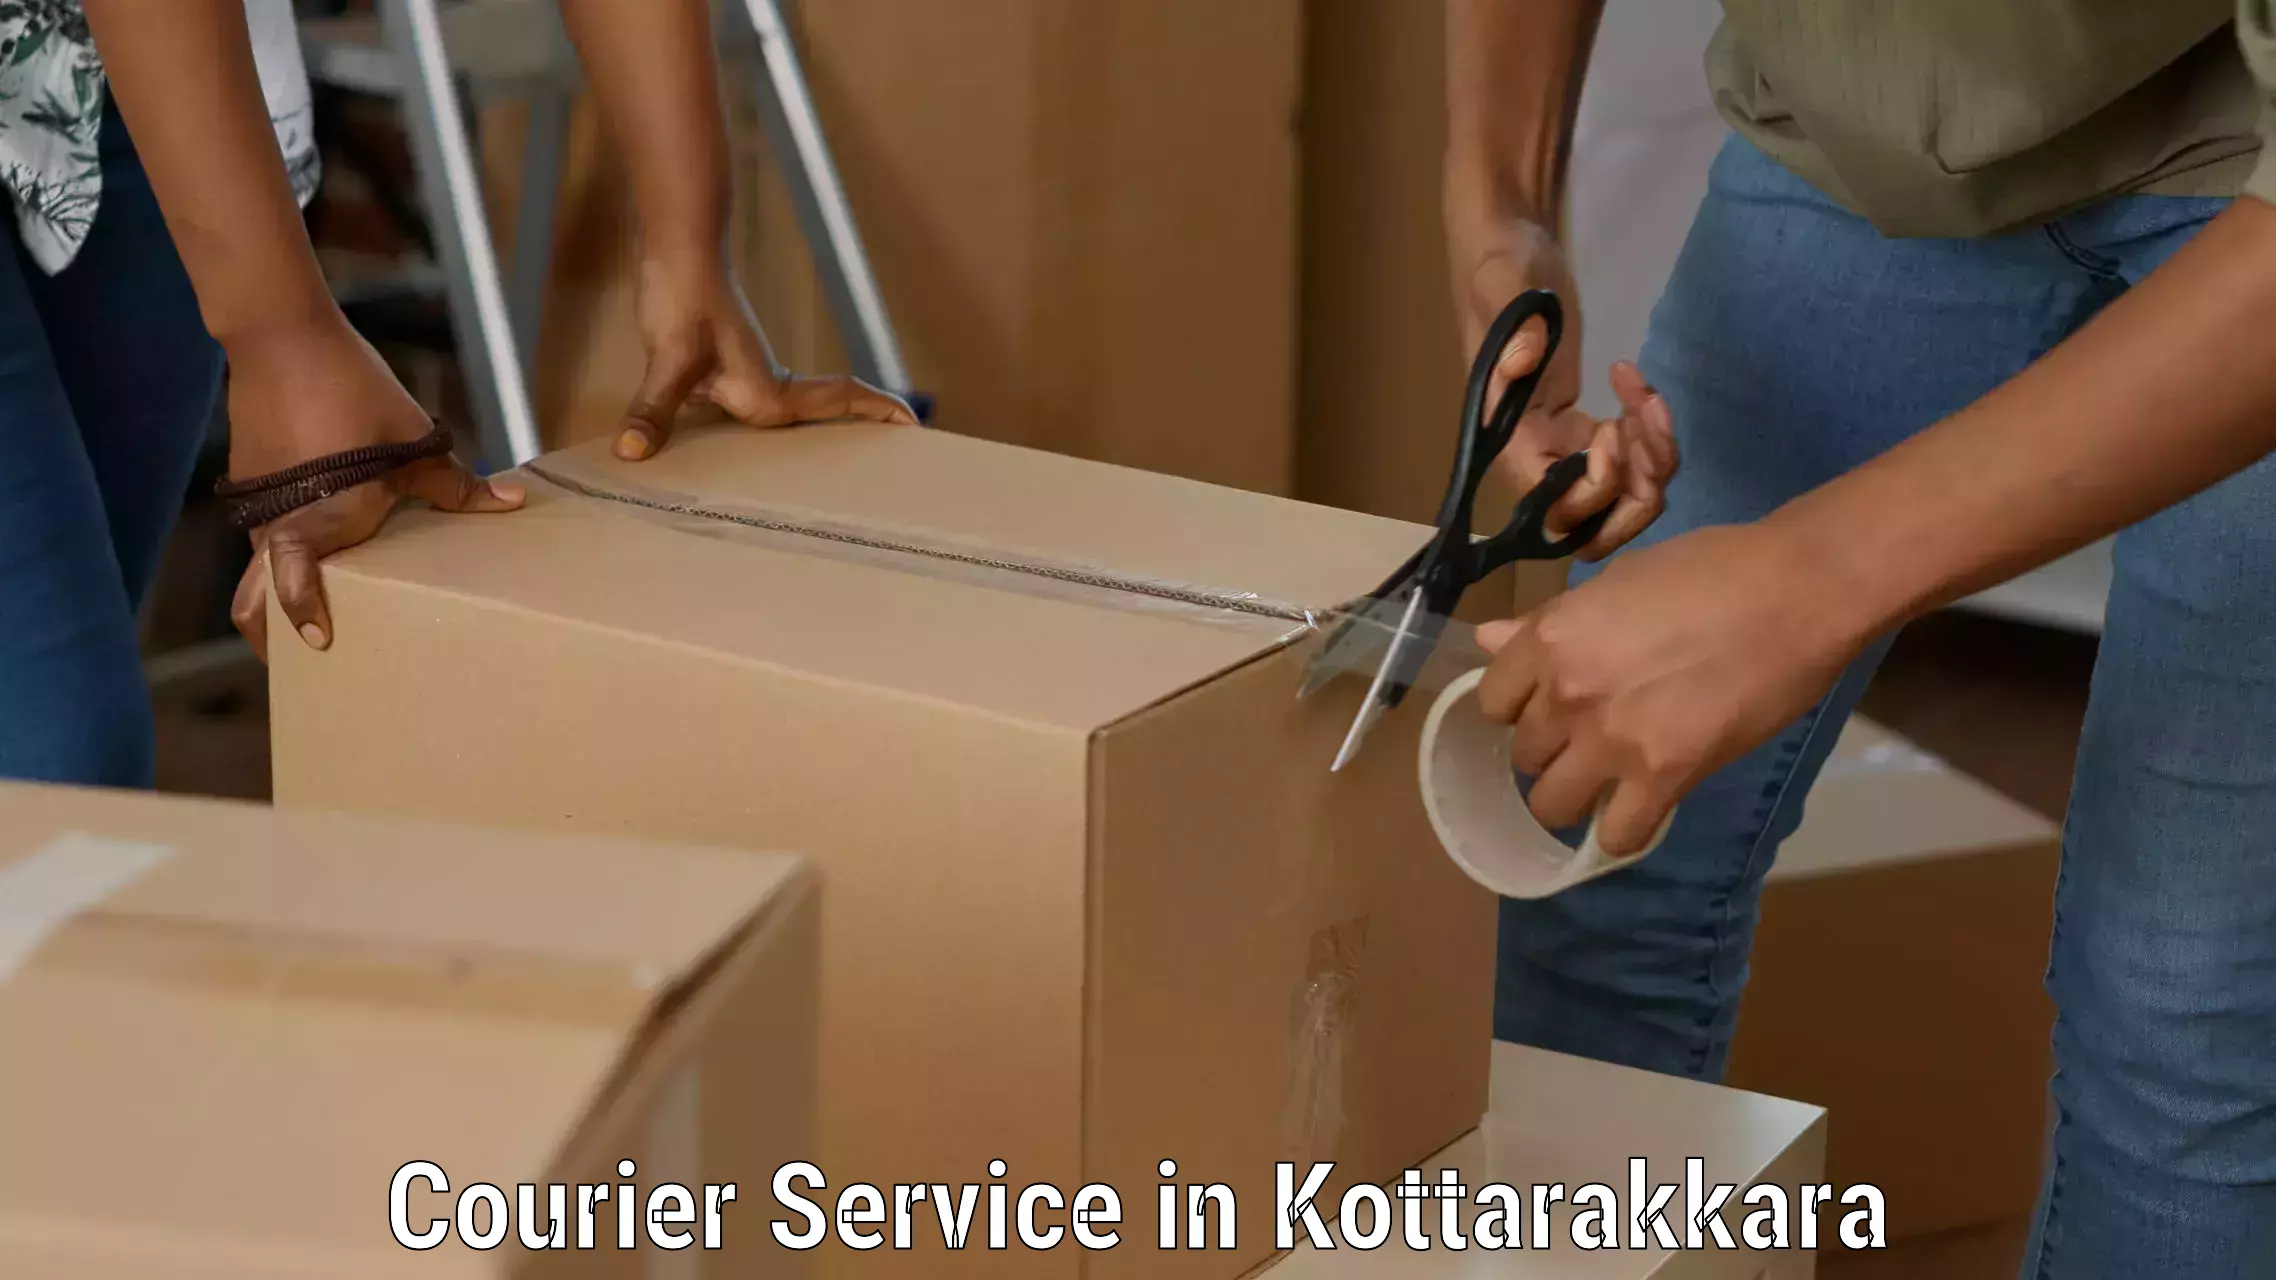 Holiday shipping services in Kottarakkara